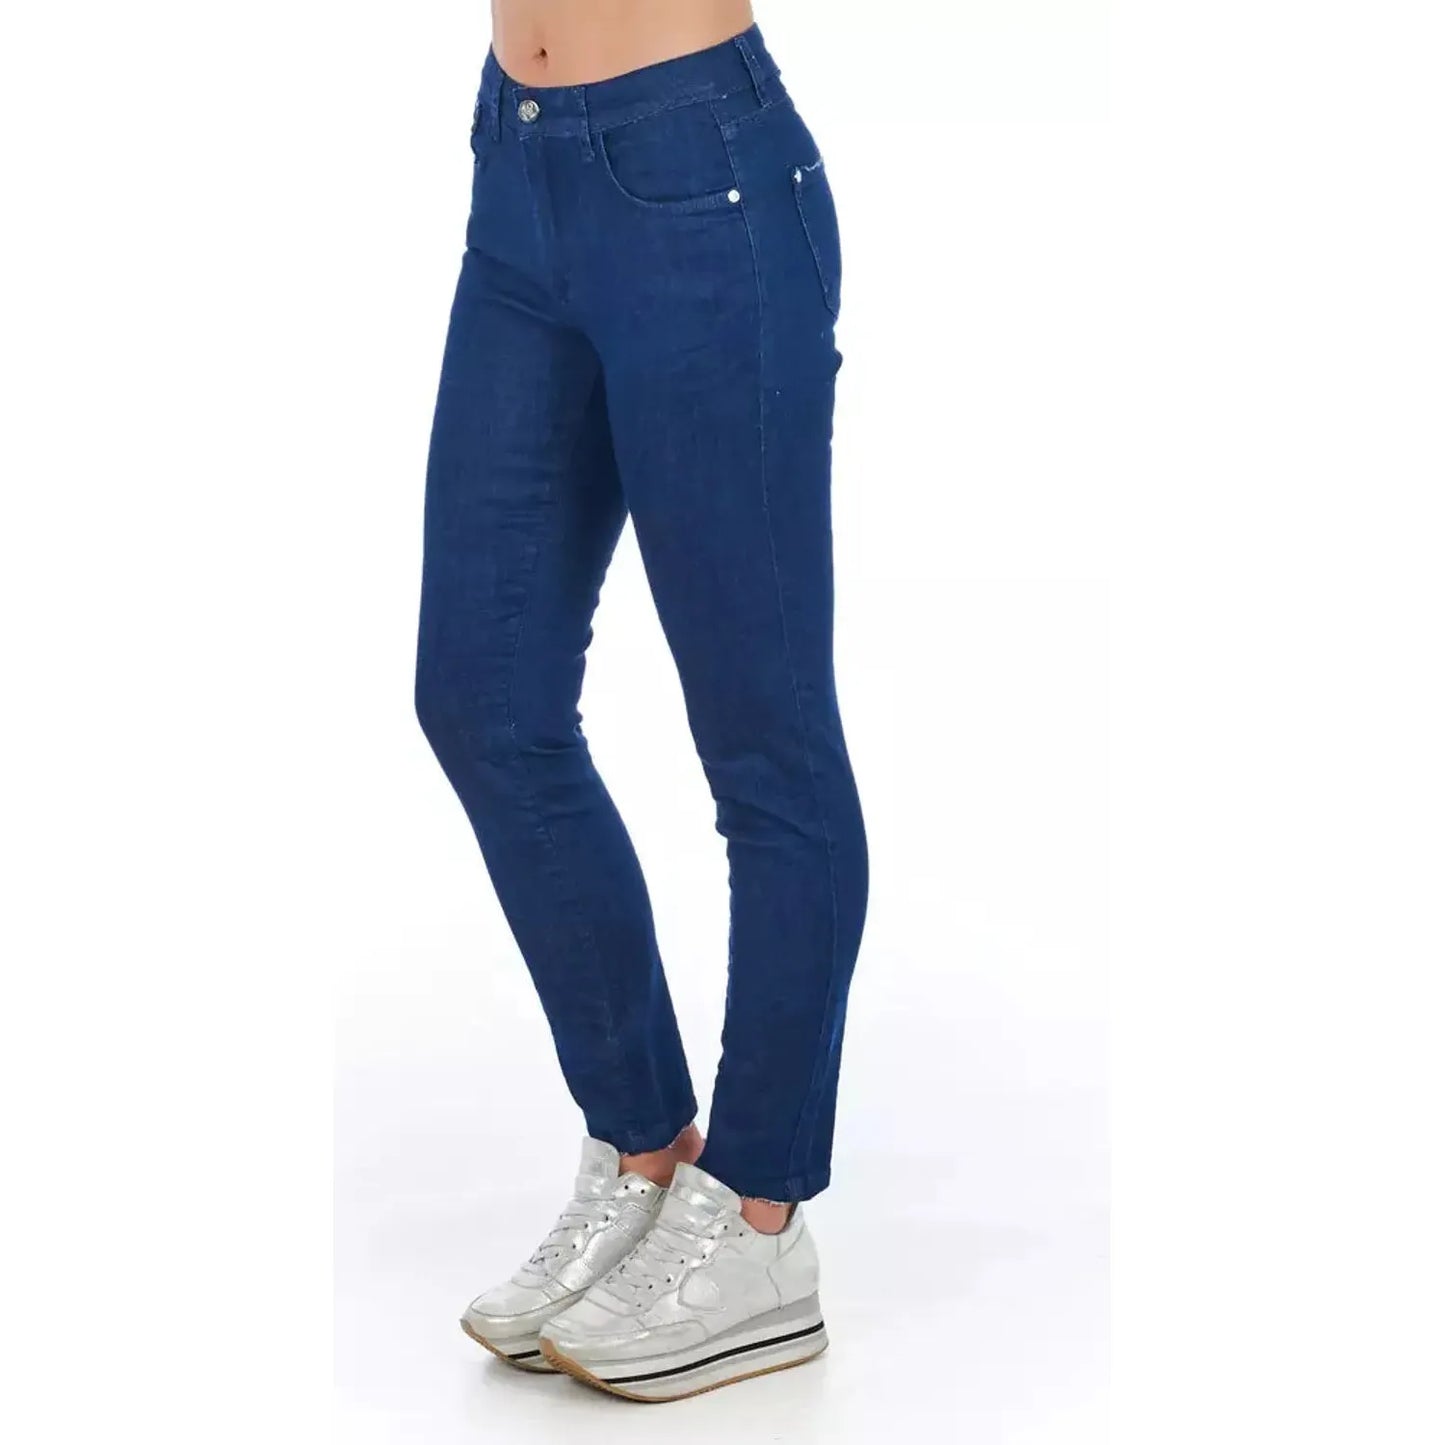 Frankie Morello Chic Multi-Pocket Skinny Denim blue-cotton-jeans-pant-50 product-21769-147617527-23-f75dbc89-364.webp